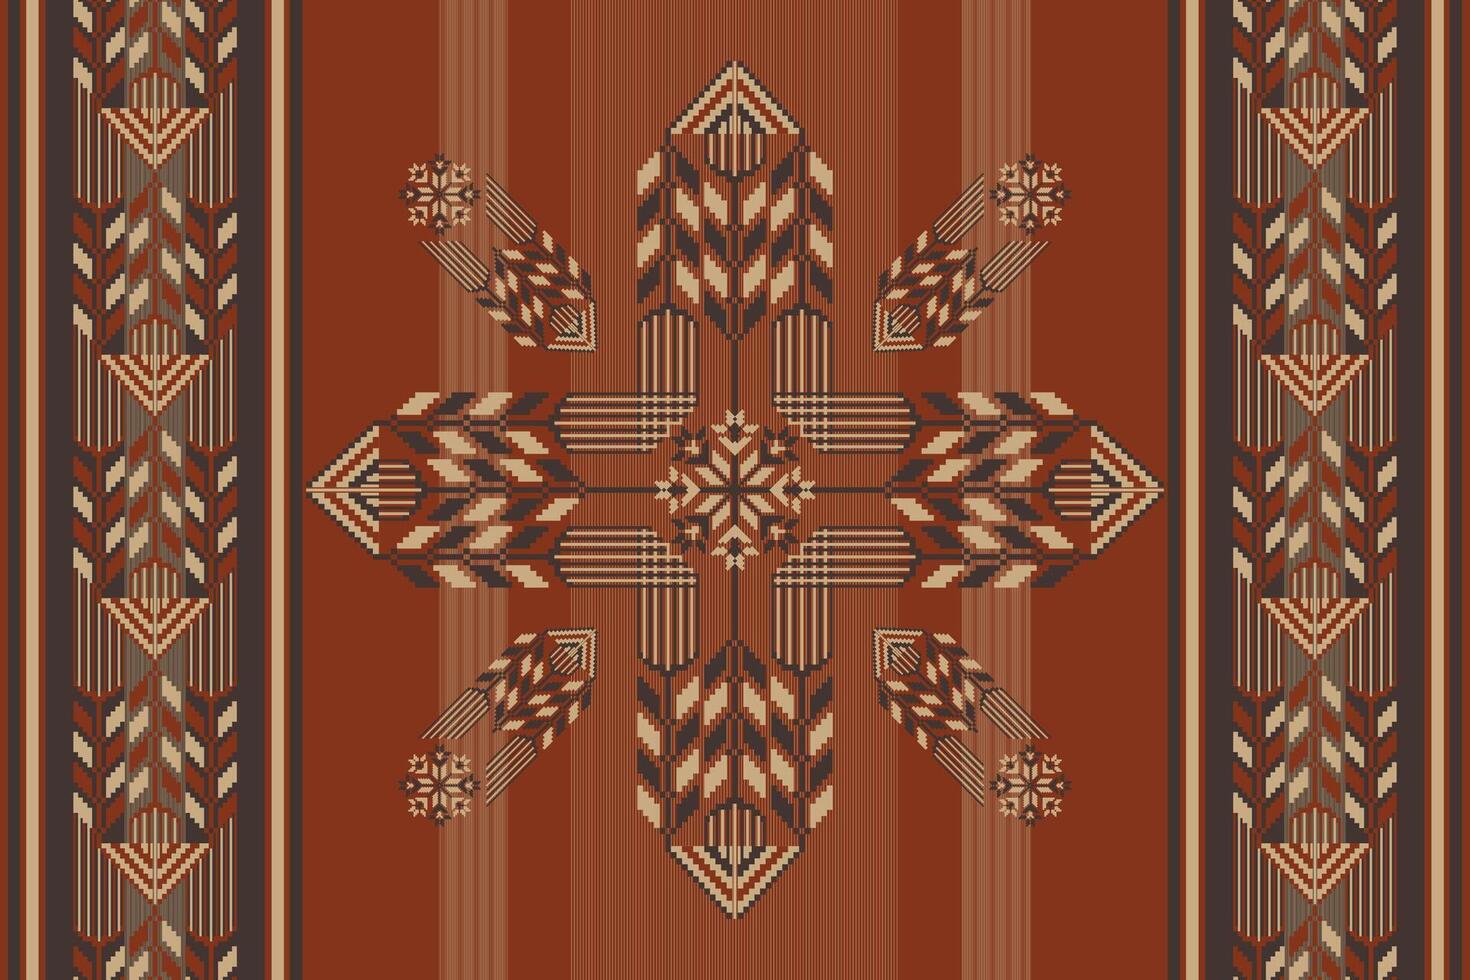 Ethnic geometric embroidery floral stripes pattern. Embroidery folk geometric floral stripes seamless pattern. Ethnic geometric pattern use for fabric, textile, home decoration elements, etc. vector